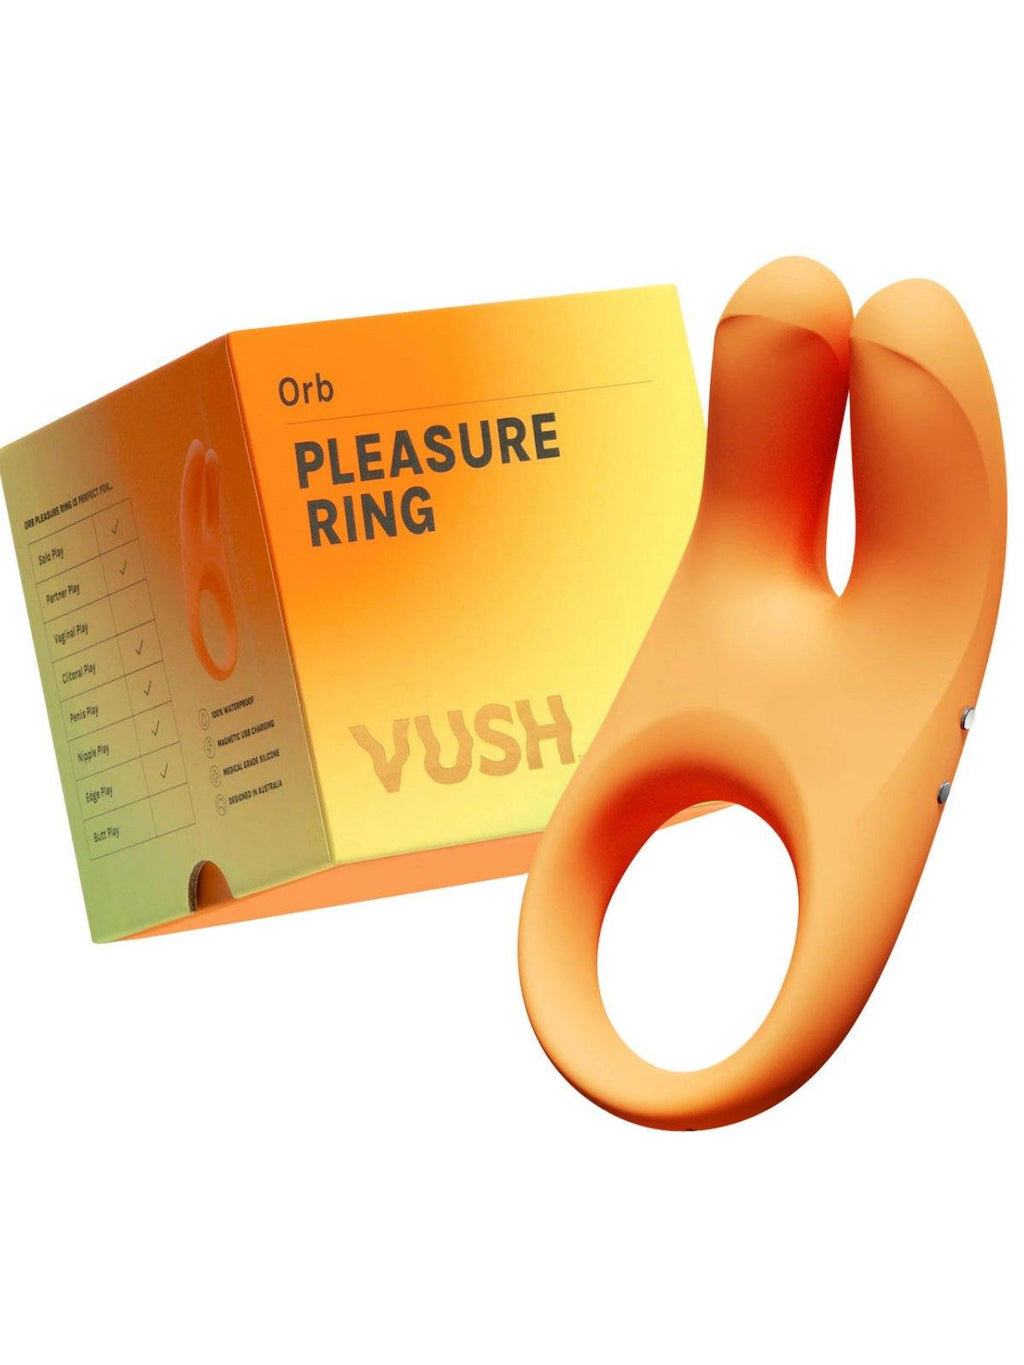 Vush Orb Pleasure Ring - Passionzone Adult Store